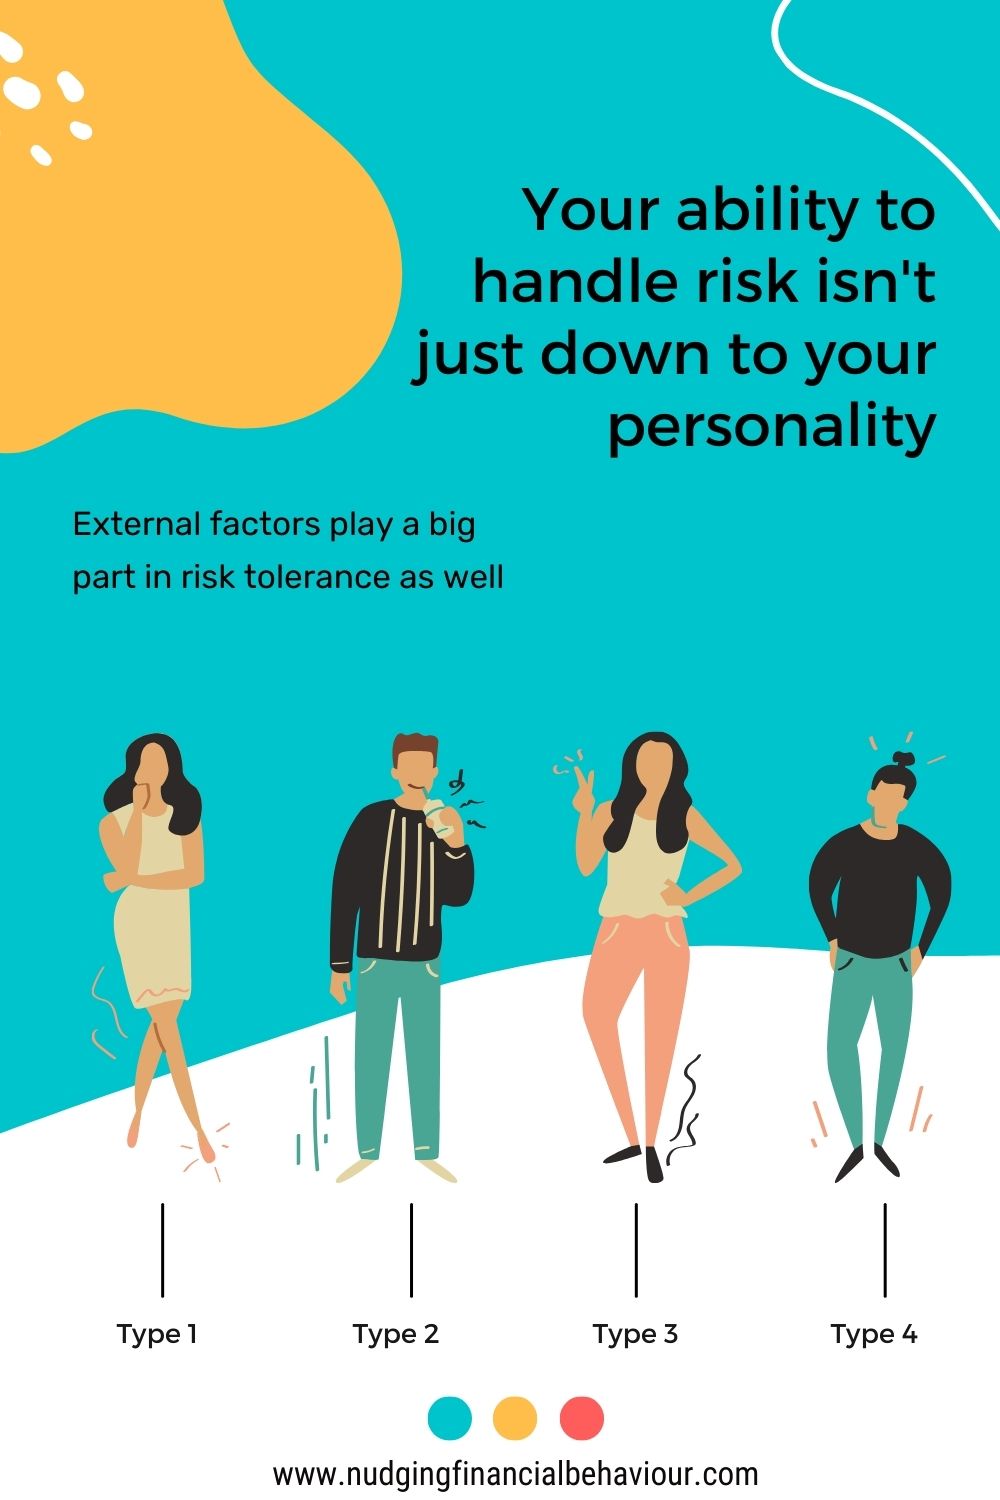 Types of risk tolerance